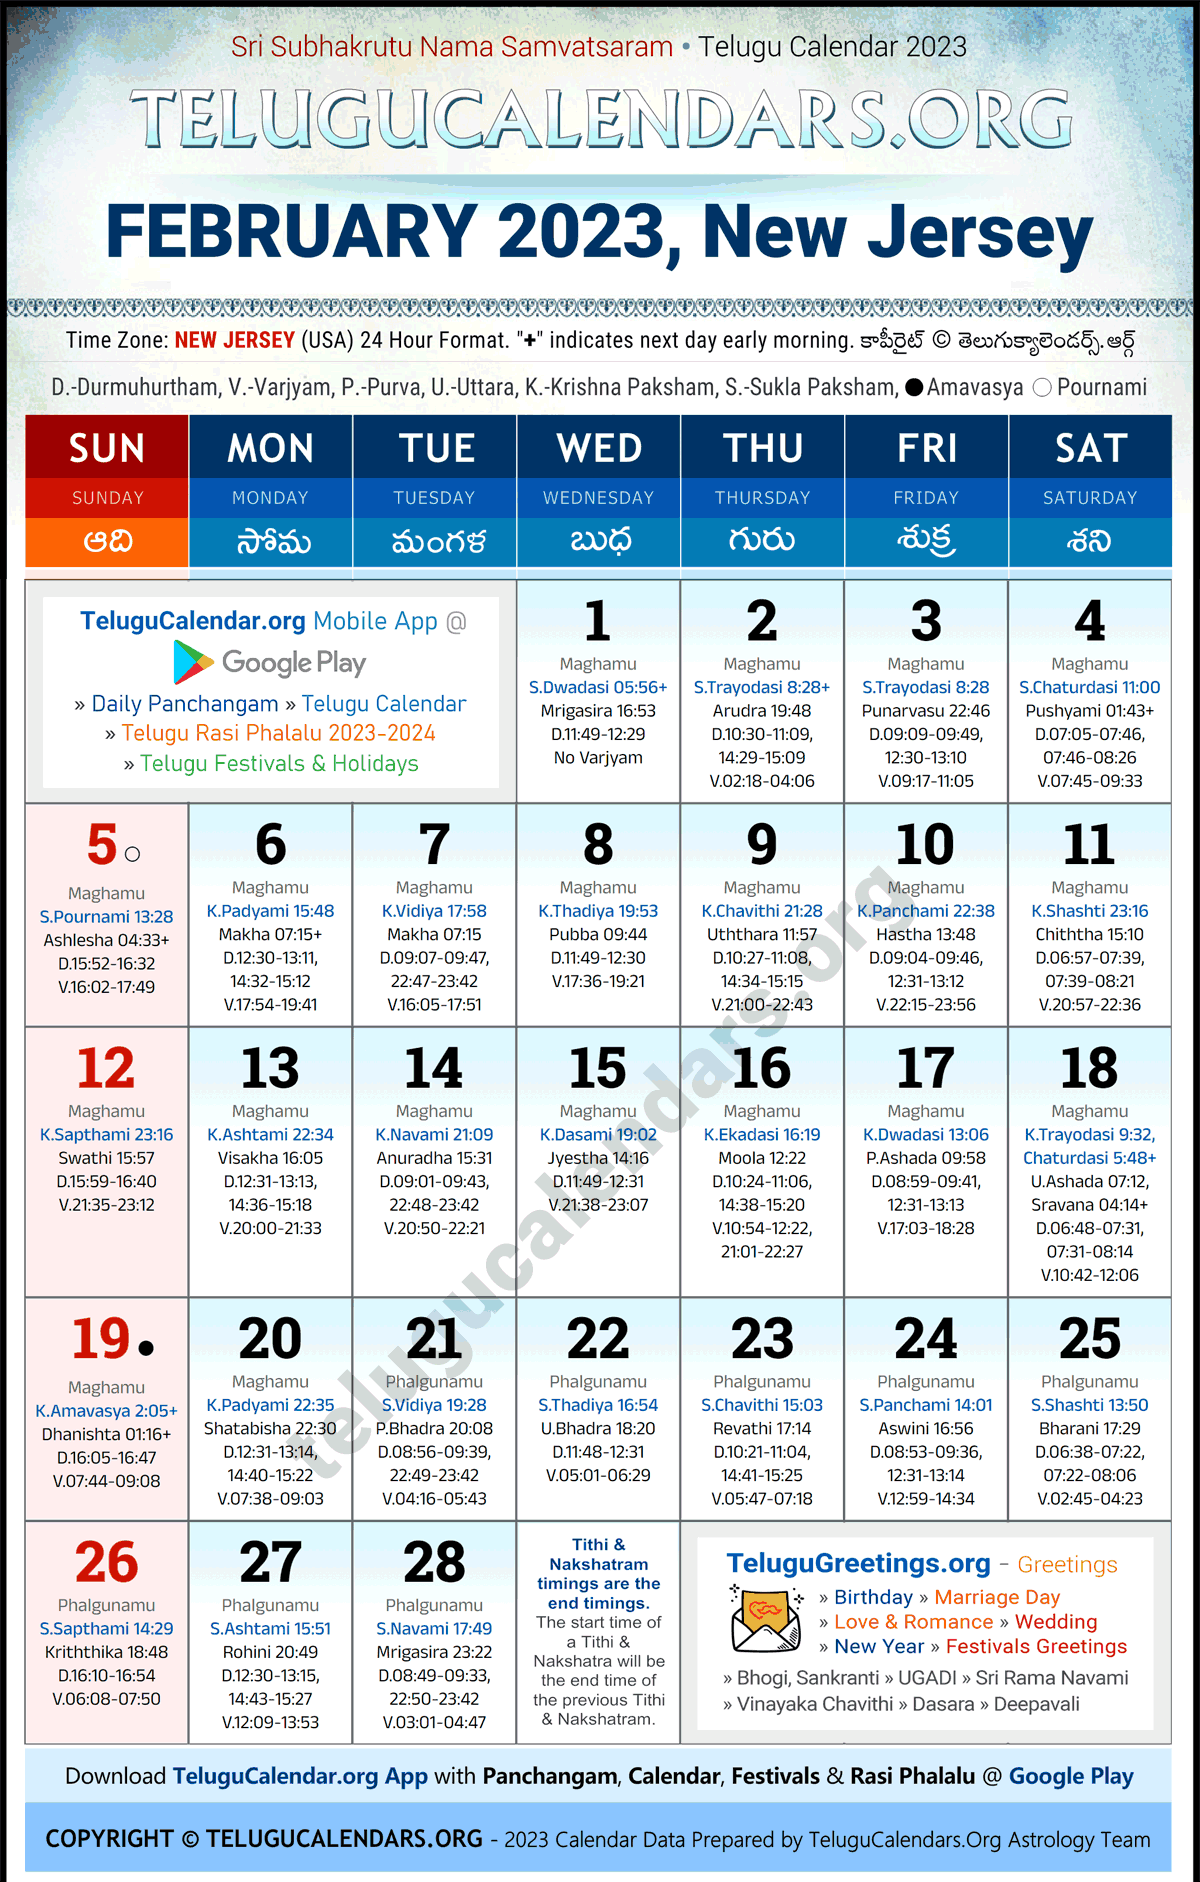 Telugu Calendar 2023 February Festivals for New Jersey